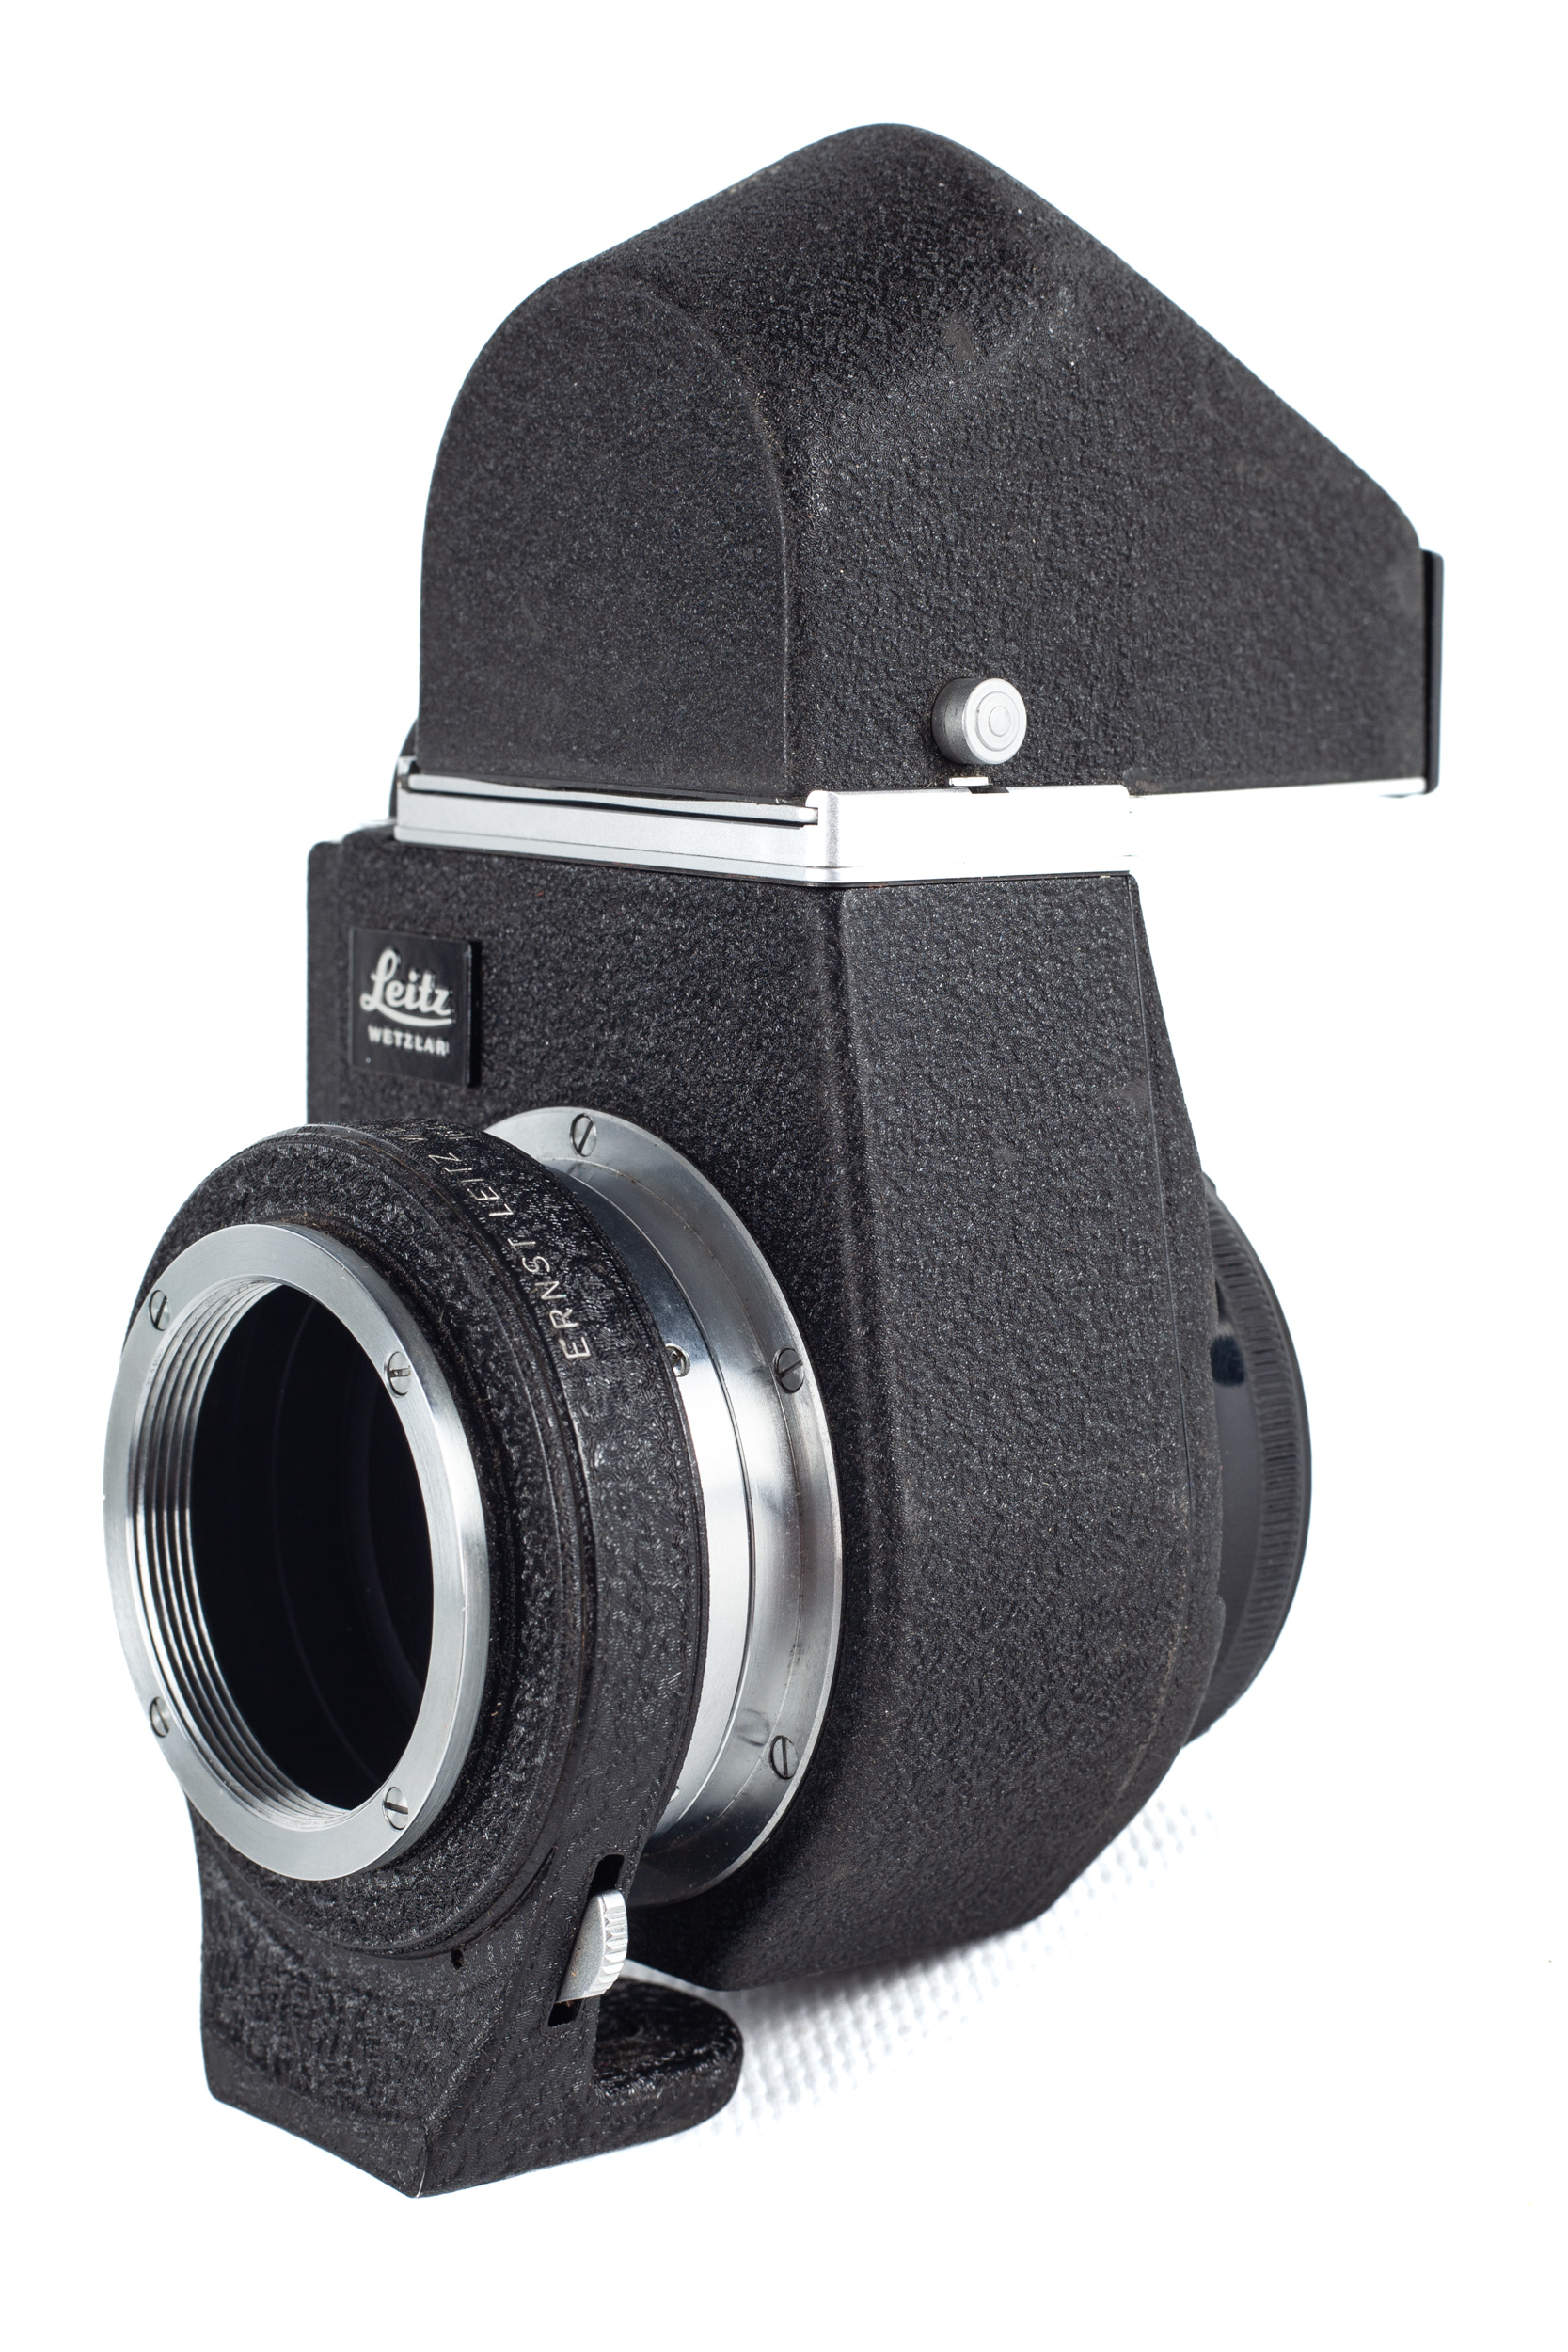 A Leica Leitz Visoflex, lens adaptor, and TTL viewfinder. - Image 2 of 4